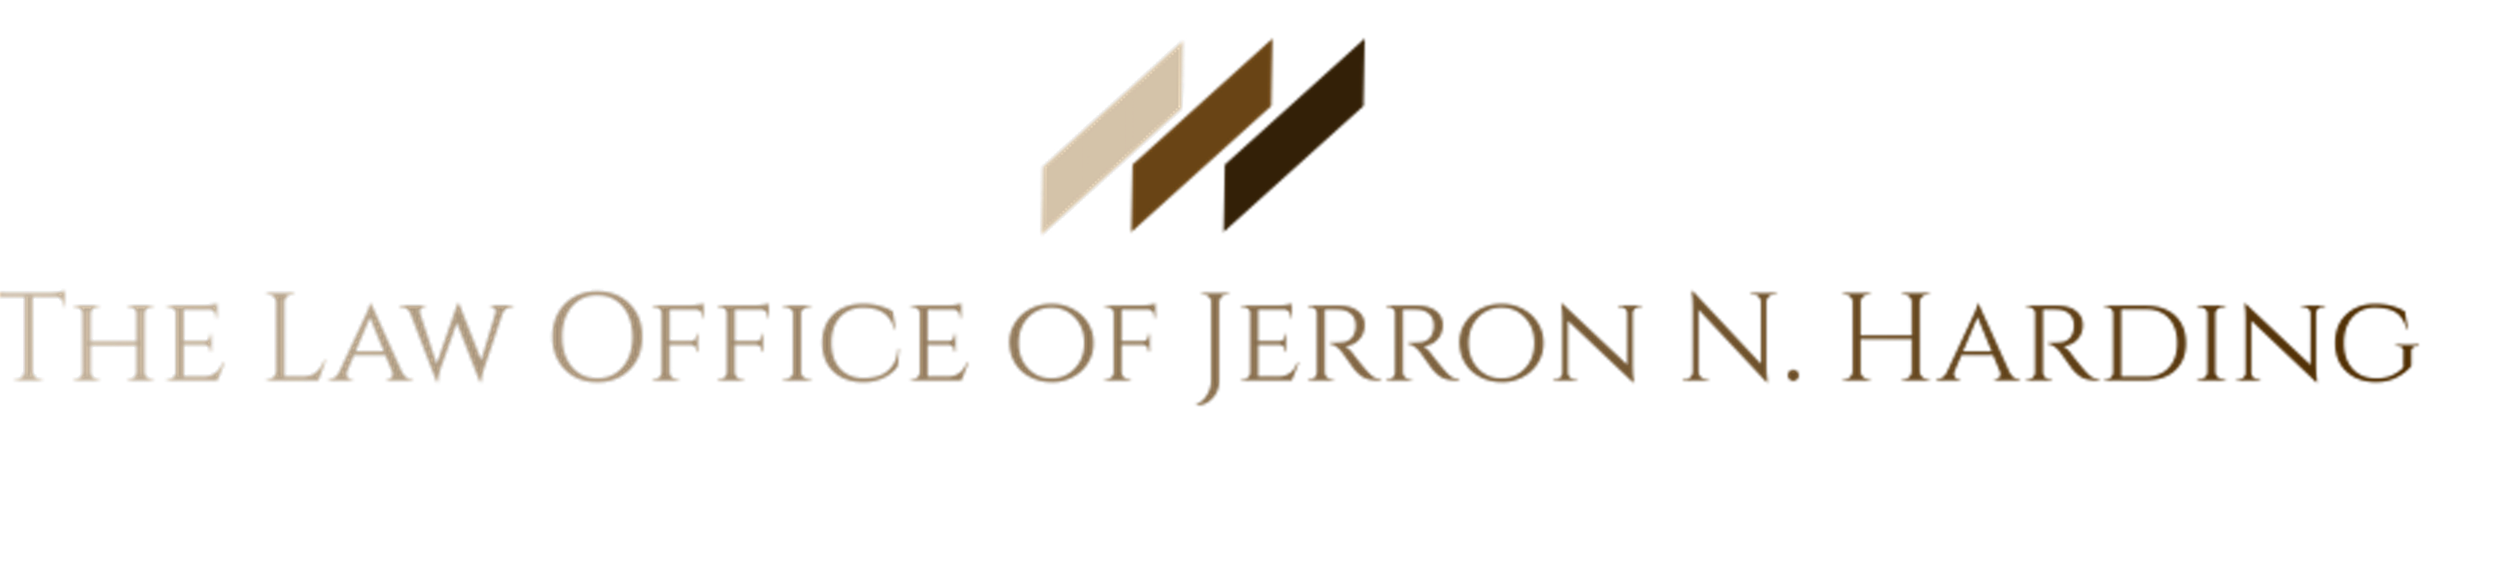 The Law Office of Jerron N. Harding